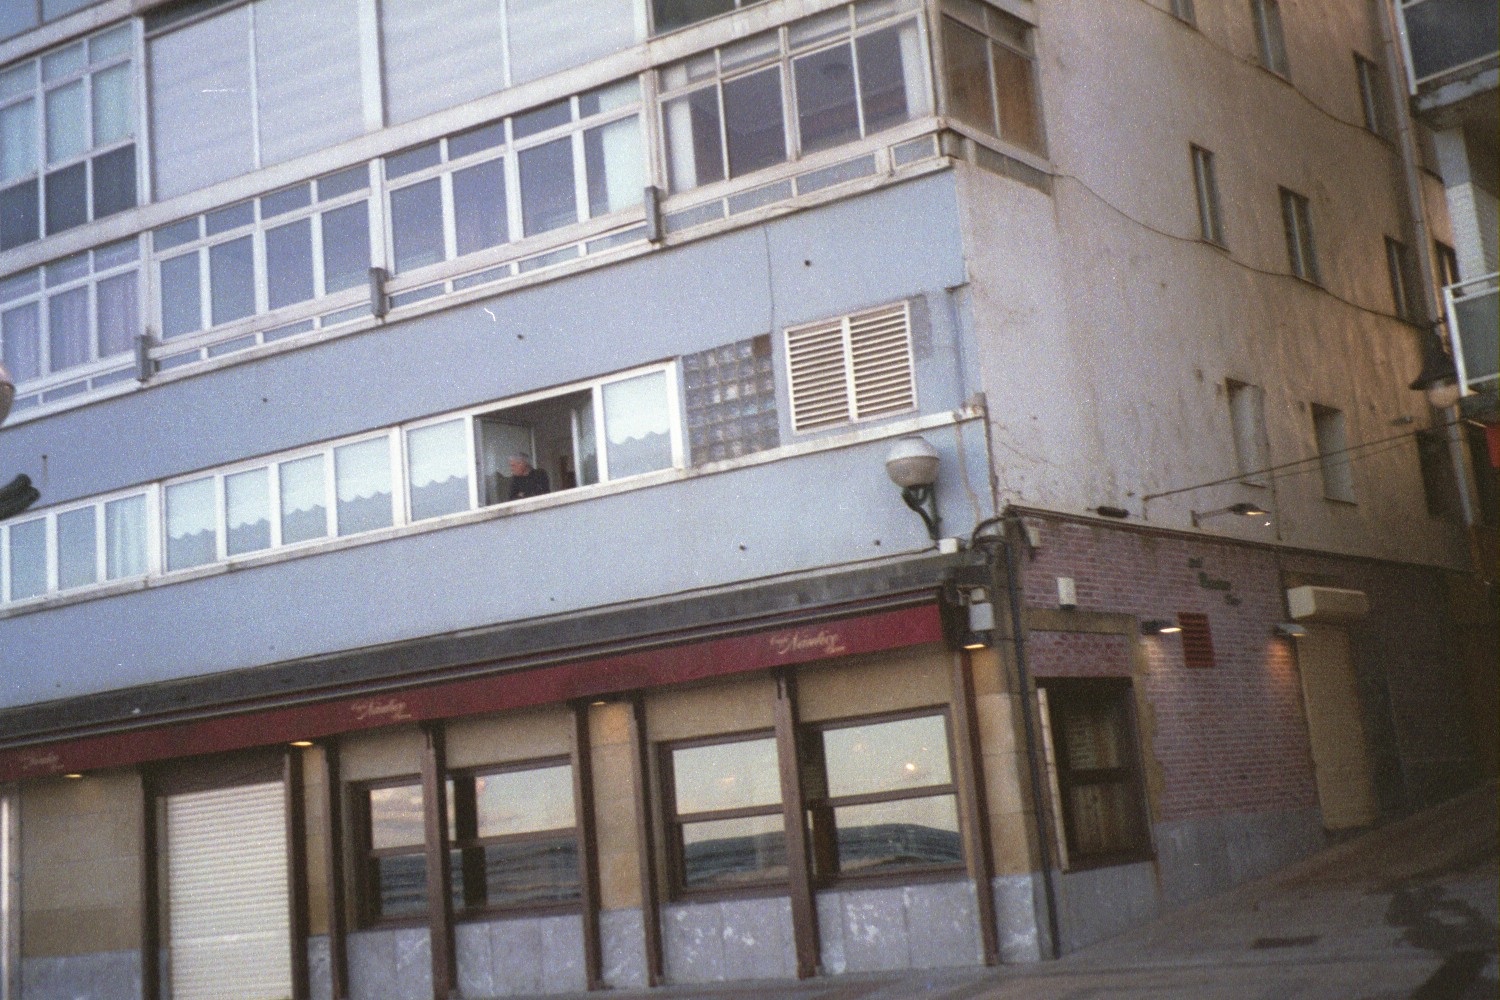 a building with a few windows next to a street light